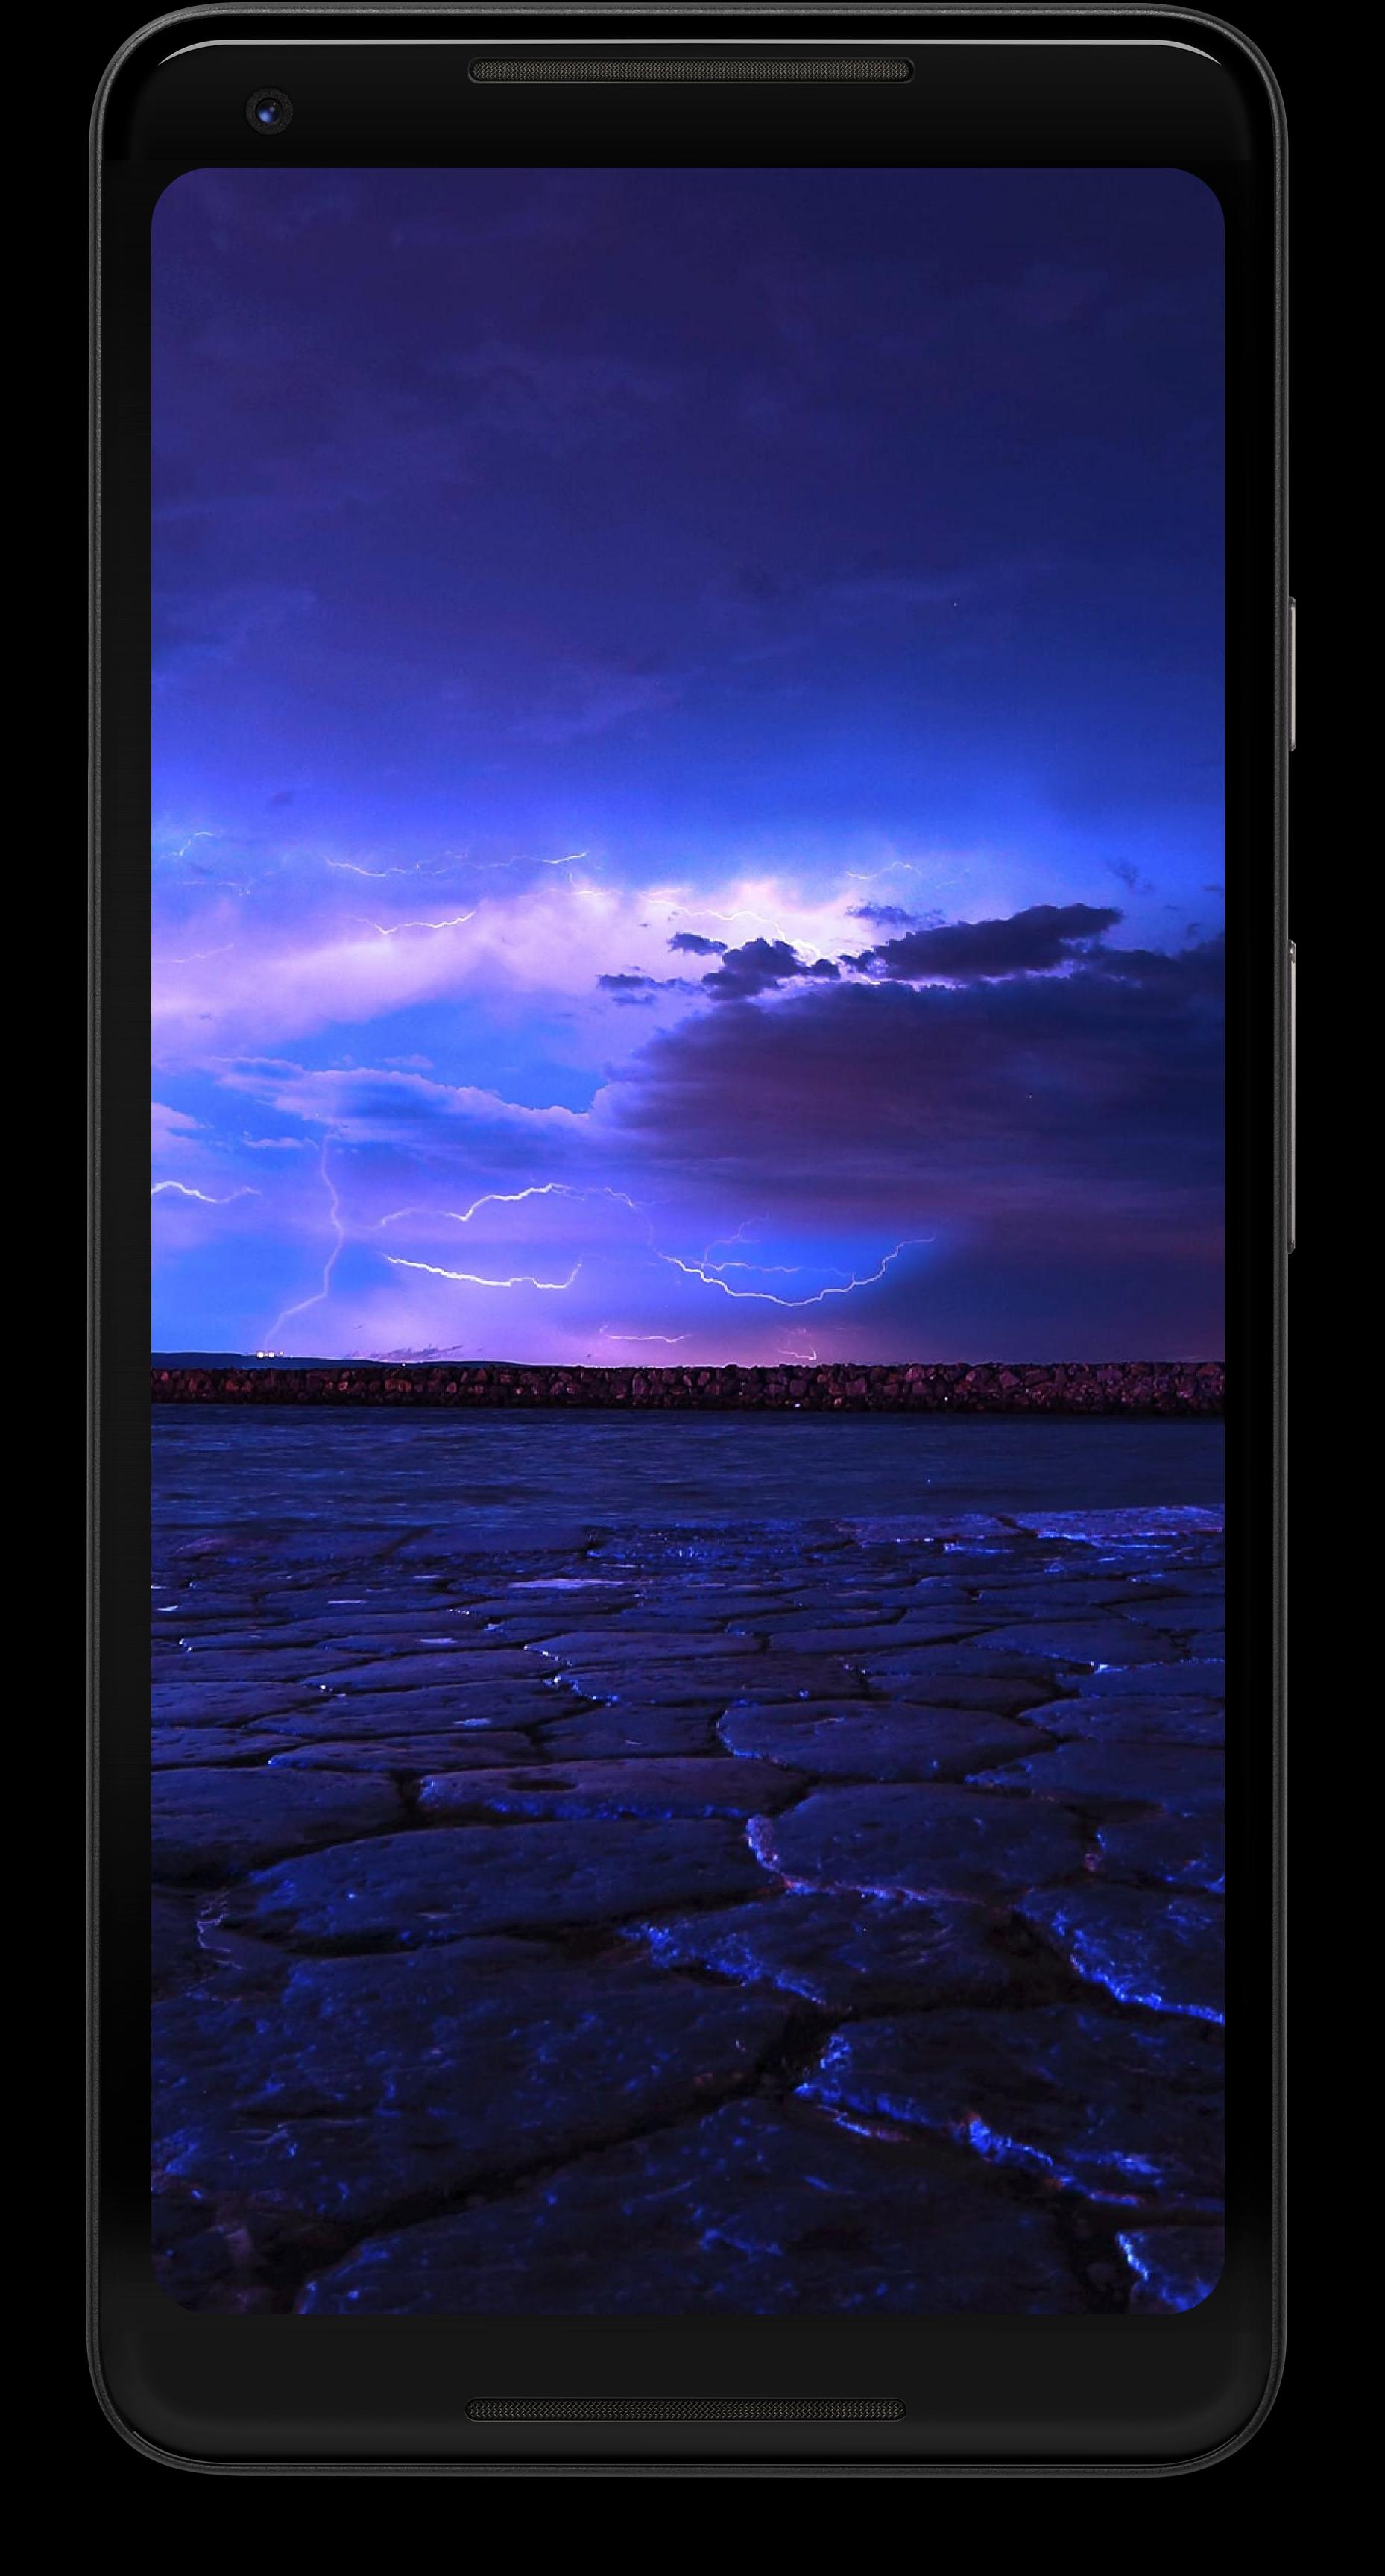 35 Gambar Wallpaper Hd Nokia Android terbaru 2020